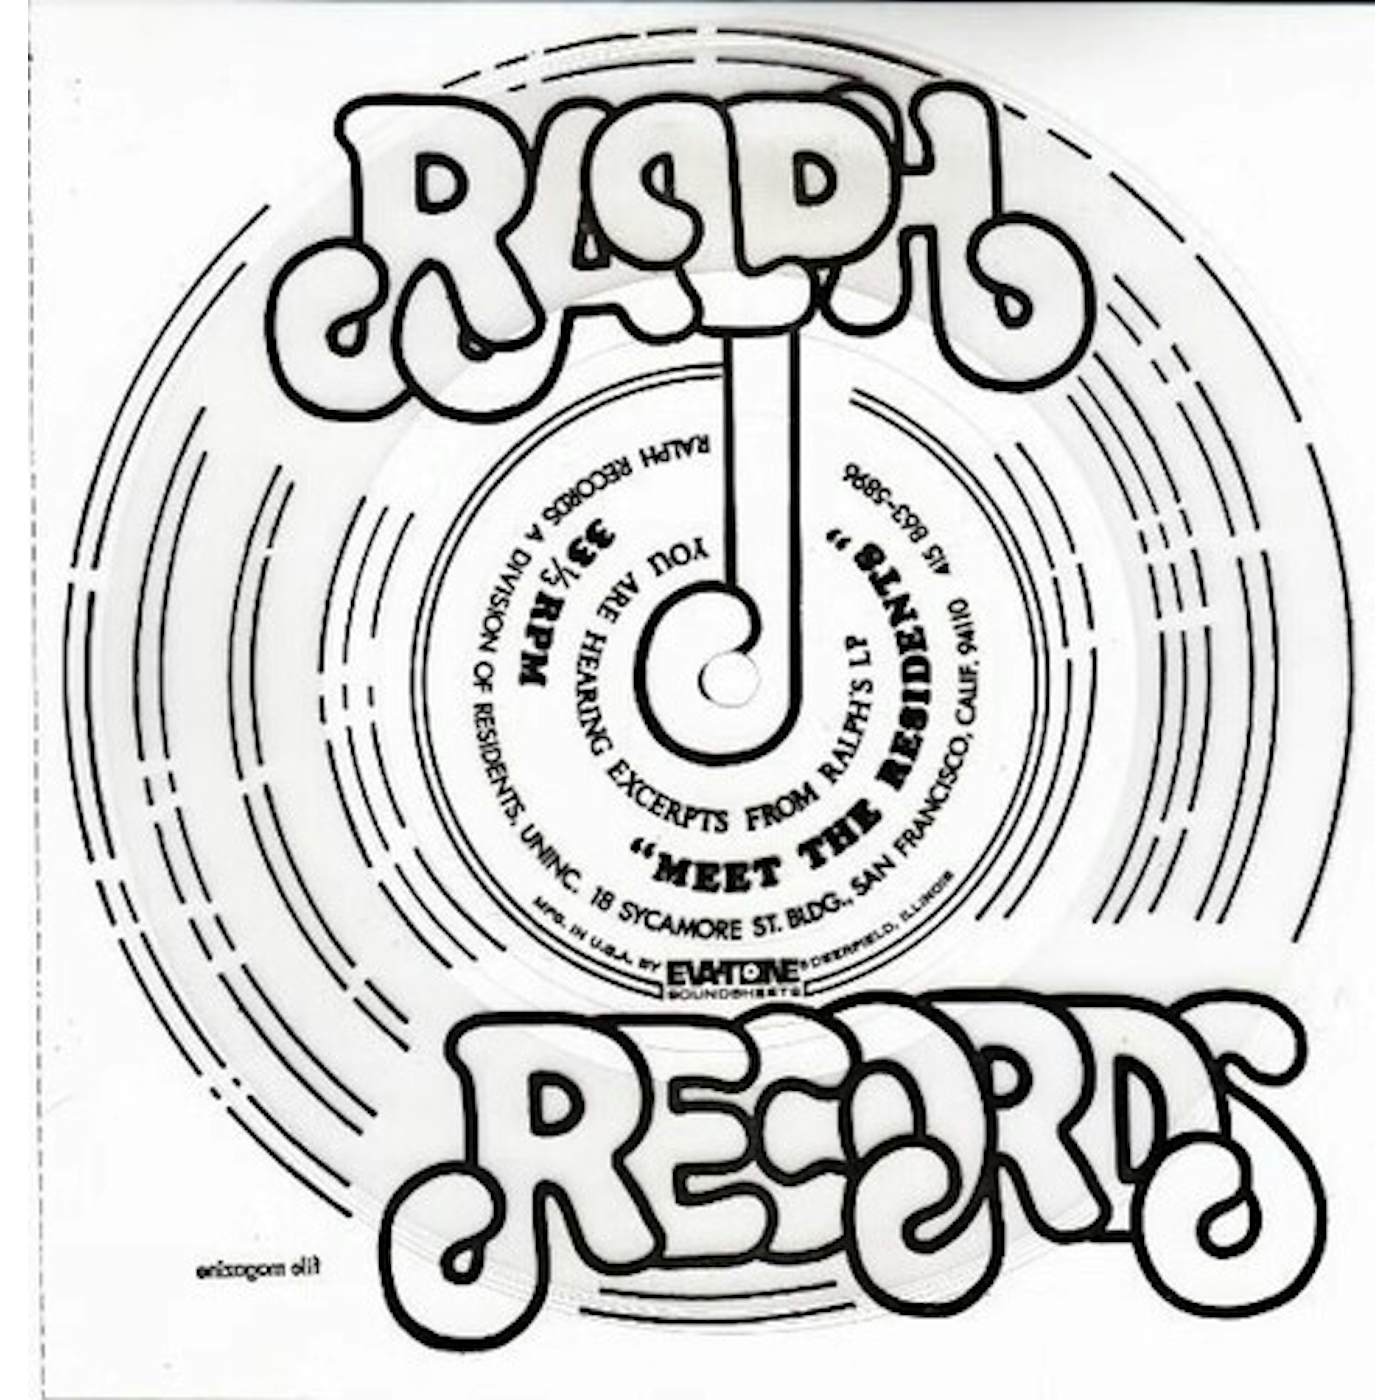 MEET THE RESIDENTS SINGLE Vinyl Record